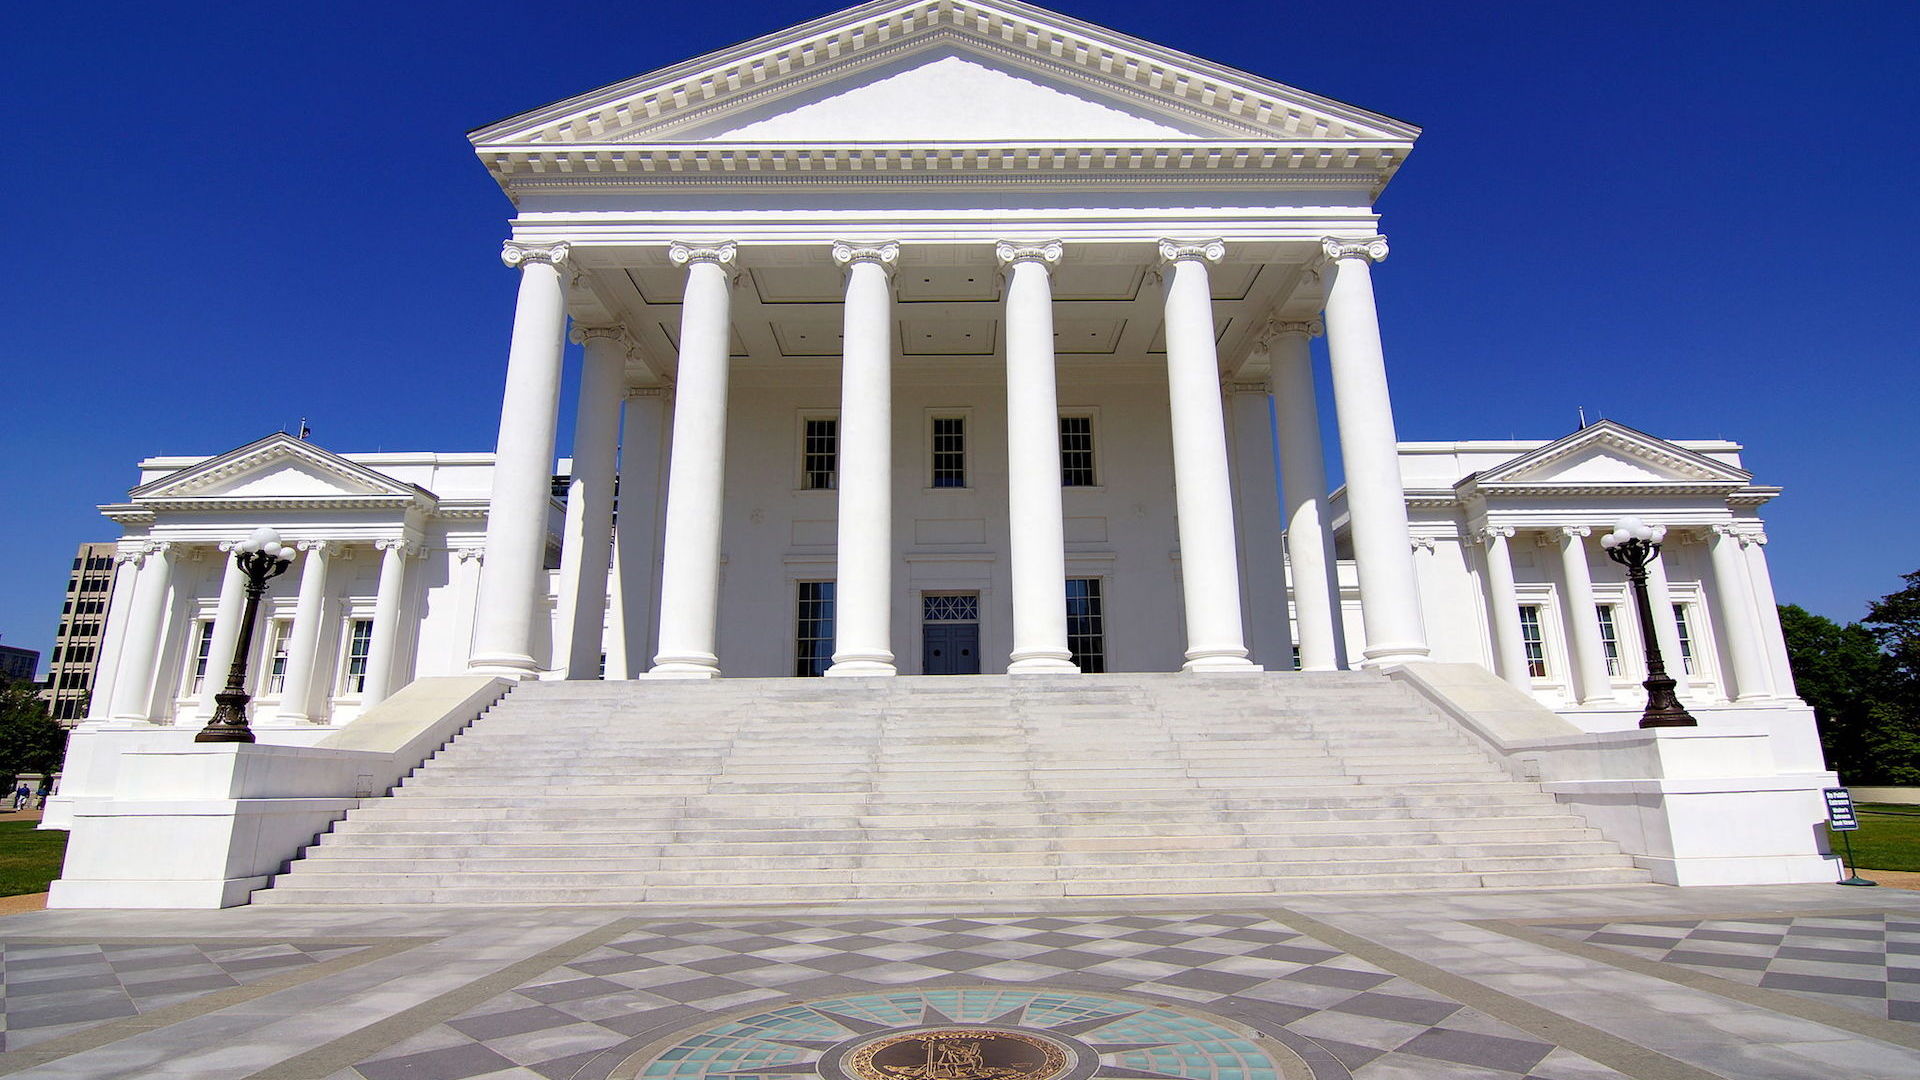 Virginia State Capitol, Skip Plitt/C'ville Photography [CC BY-SA 3.0]